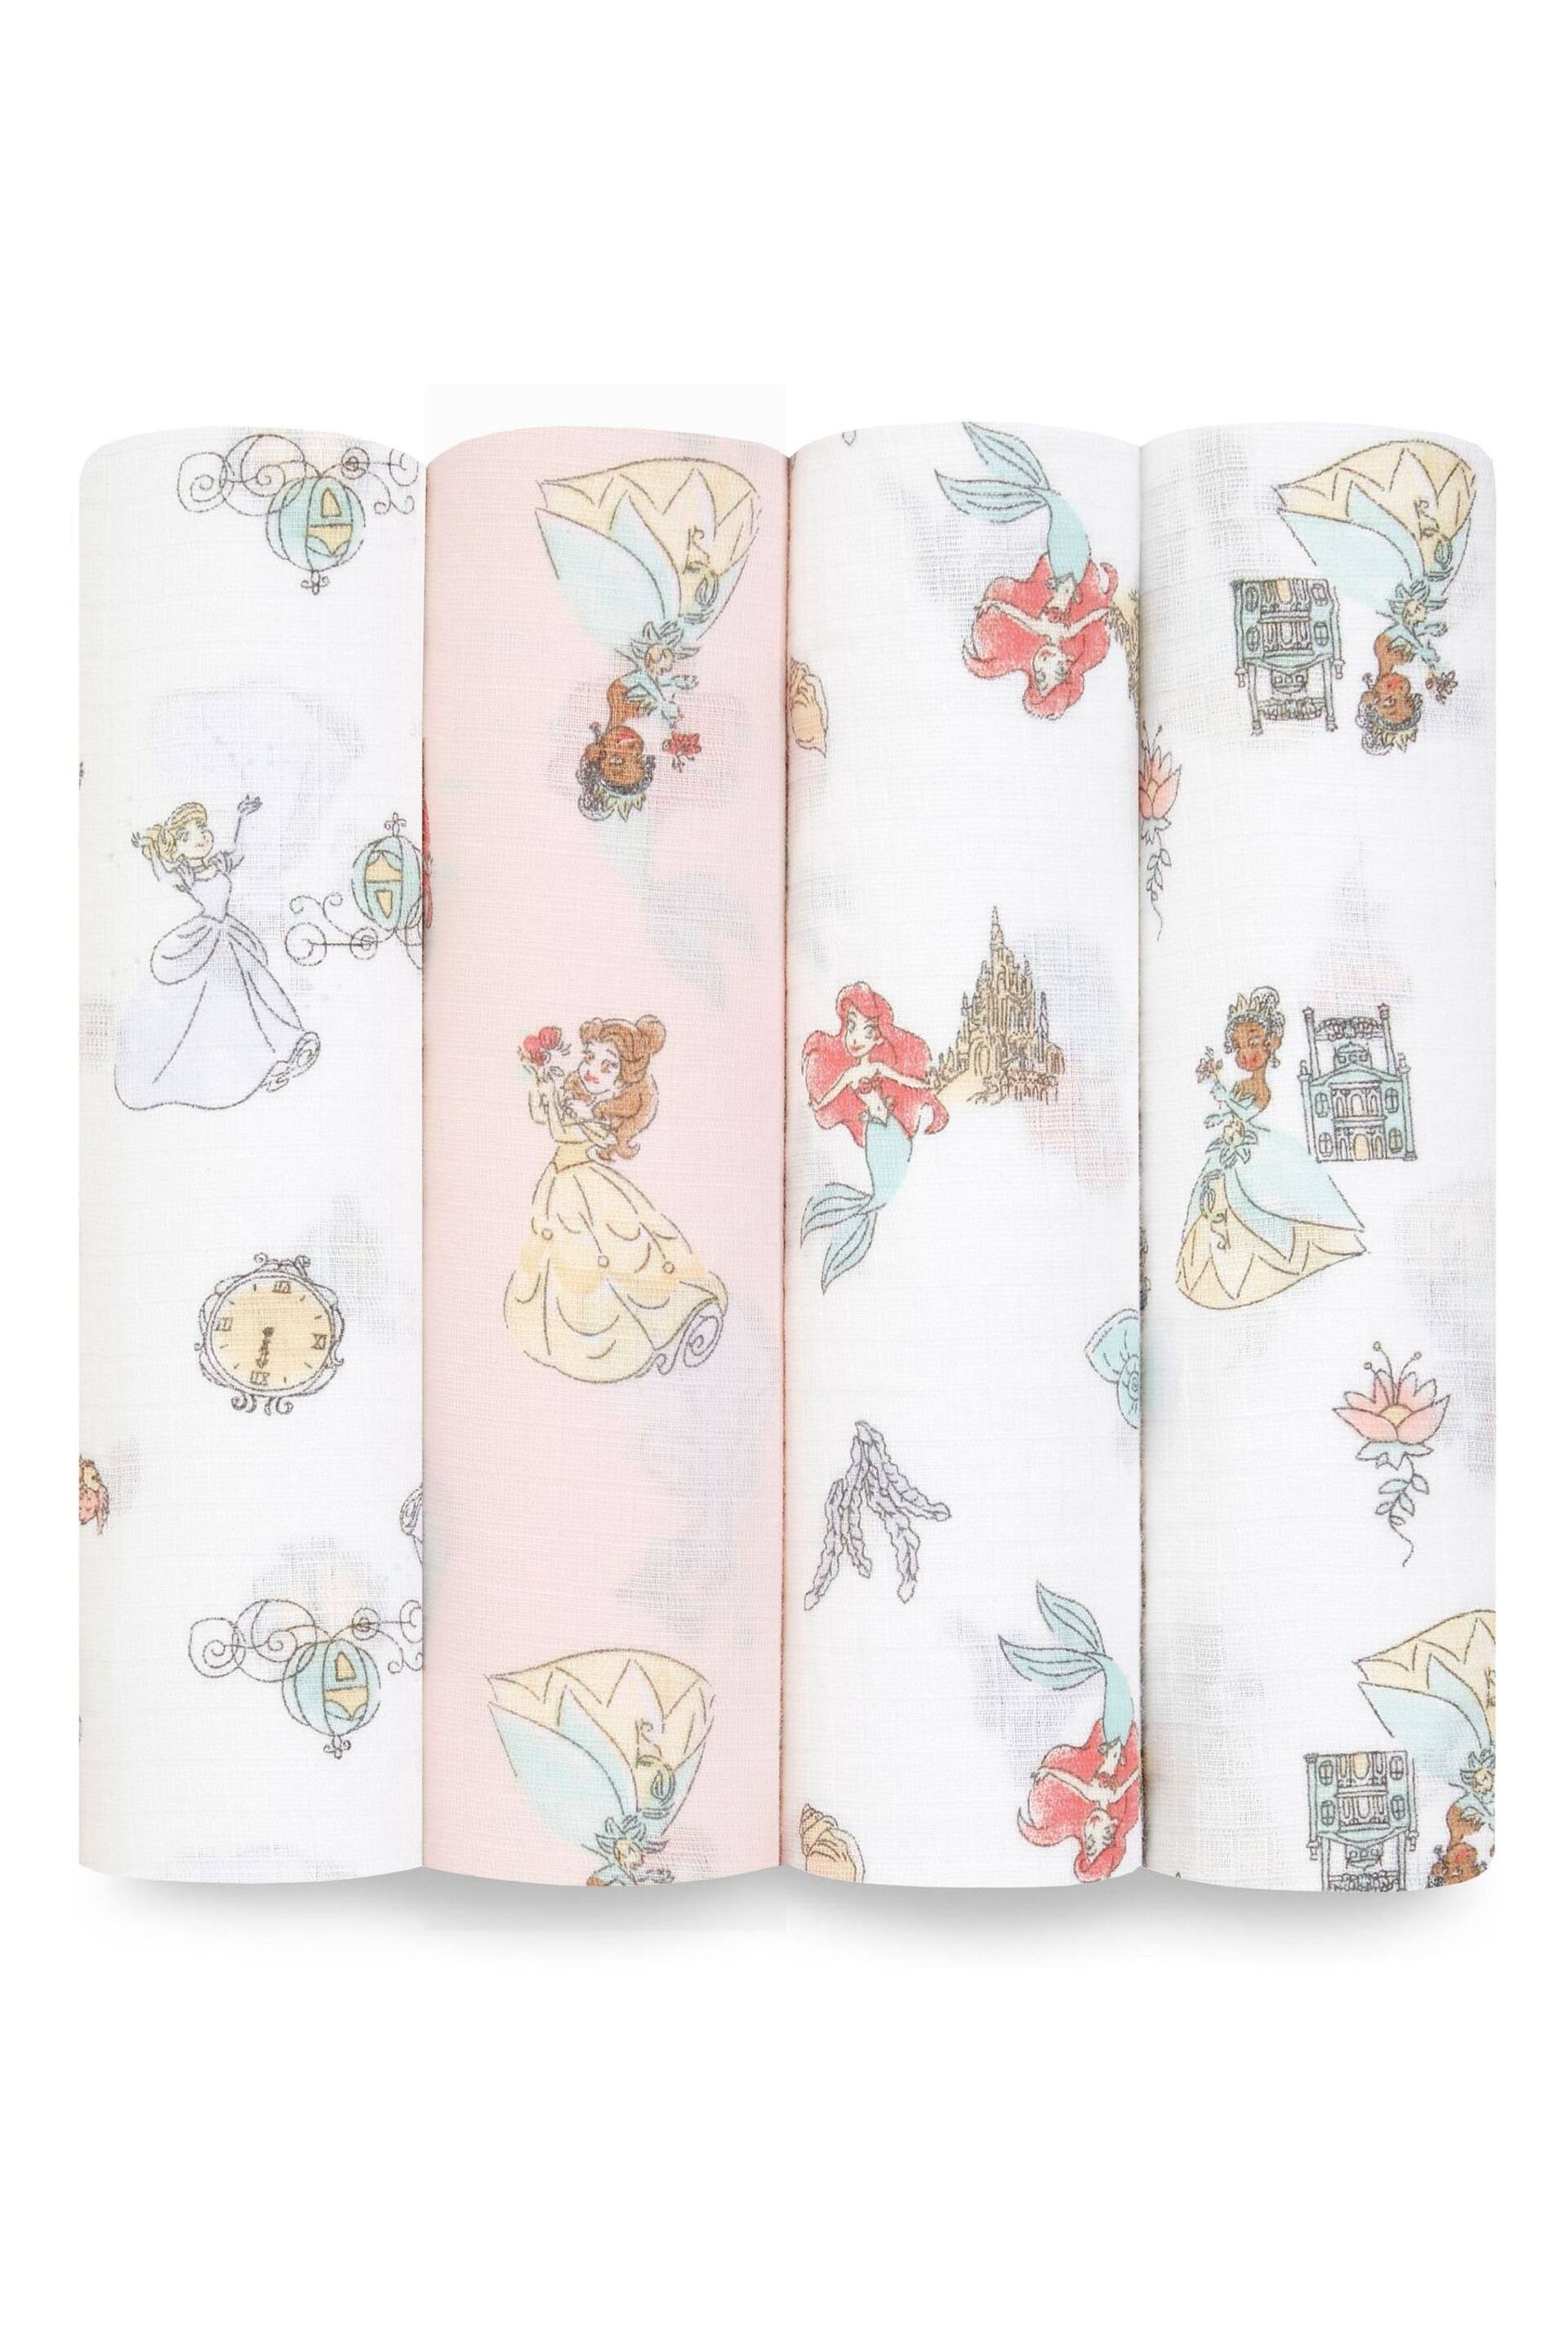 aden + anais Disney Princess Essentials Cotton Muslin Blankets 4 Pack - Image 1 of 5